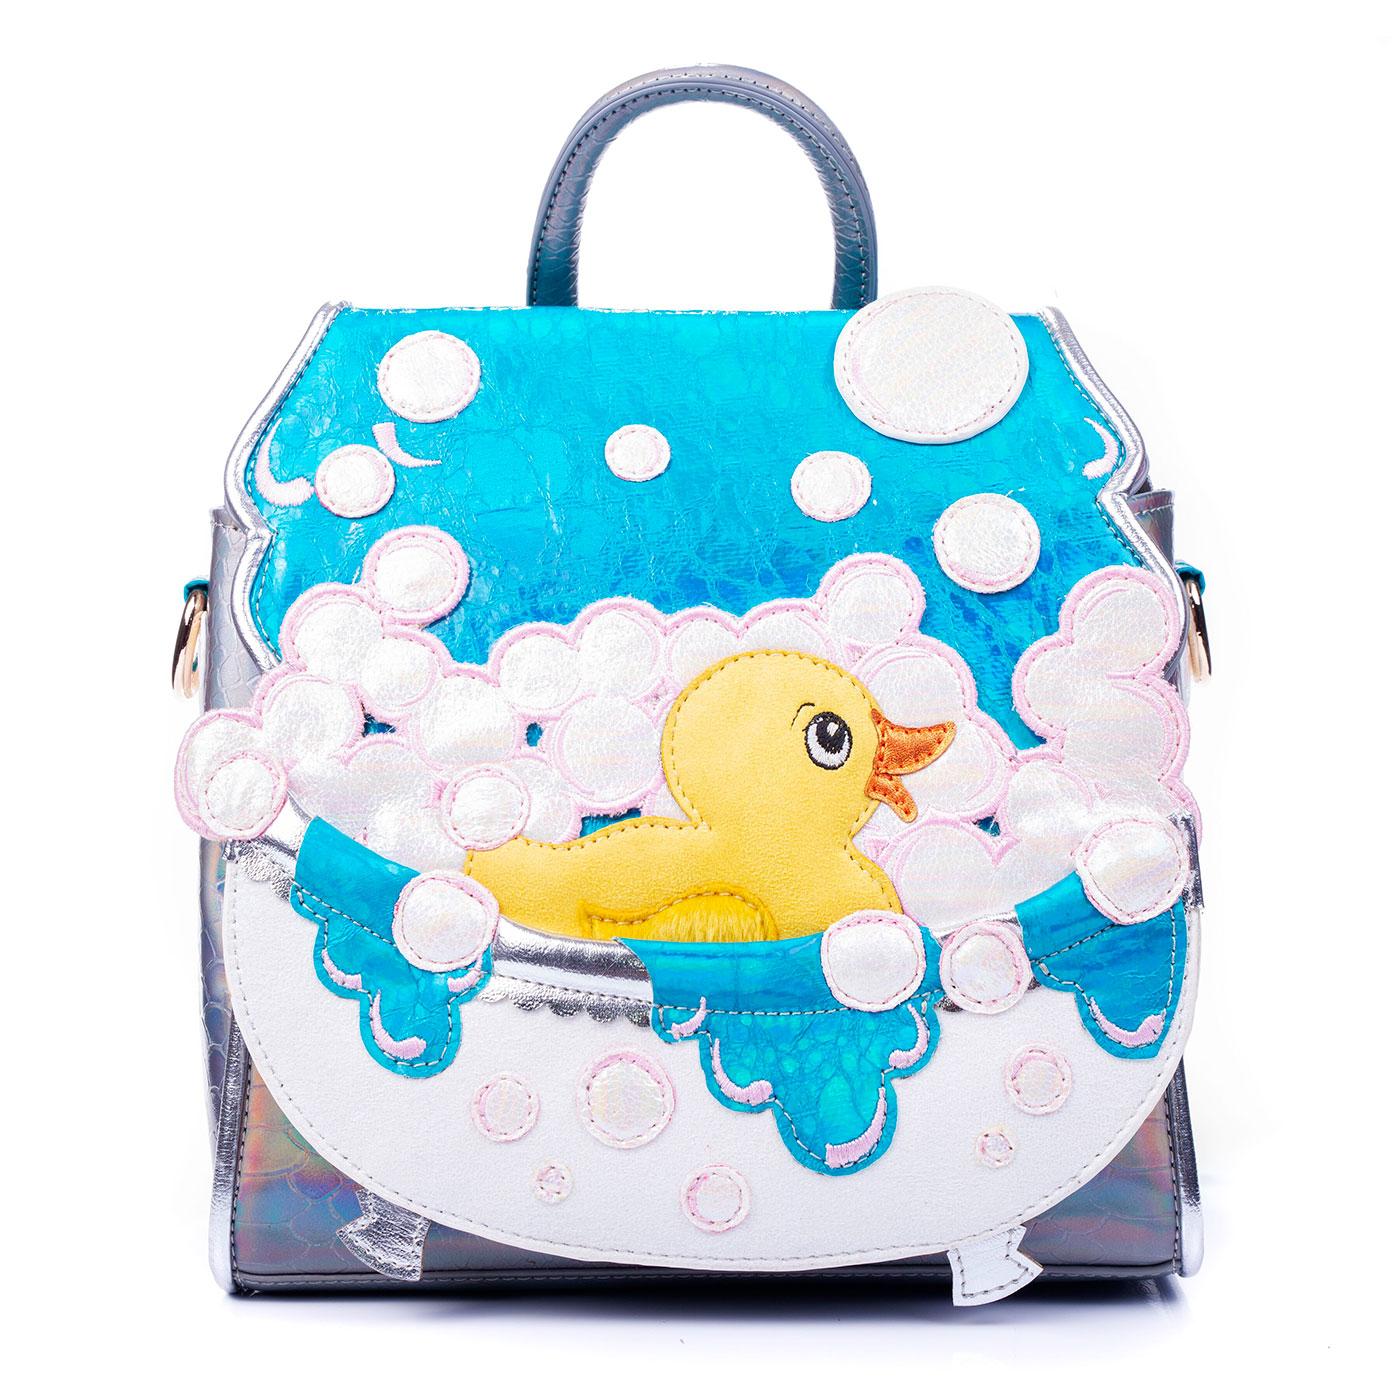 Bubble Bag IRREGULAR CHOICE Rubber Duck Bag